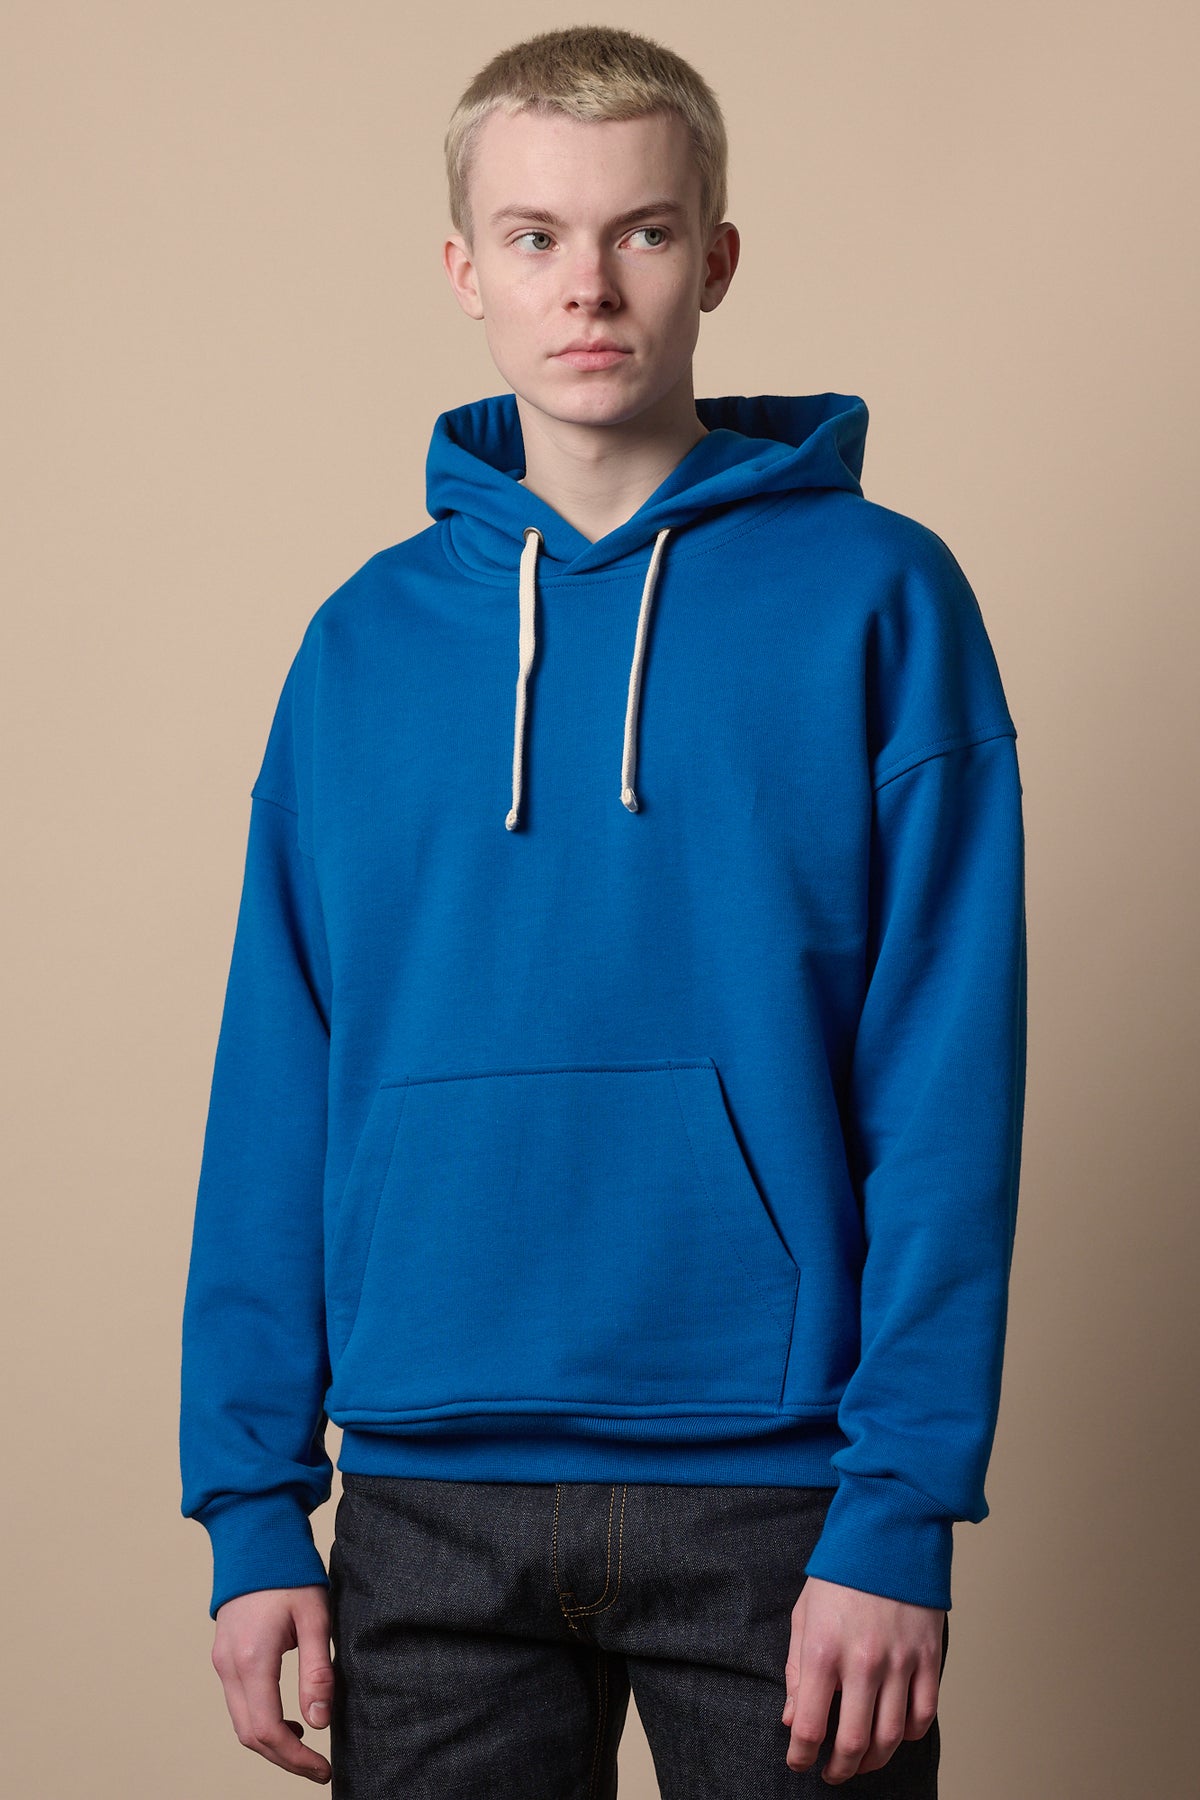 
            Thigh up image of blonde male wearing cobalt hooded sweatshirt 